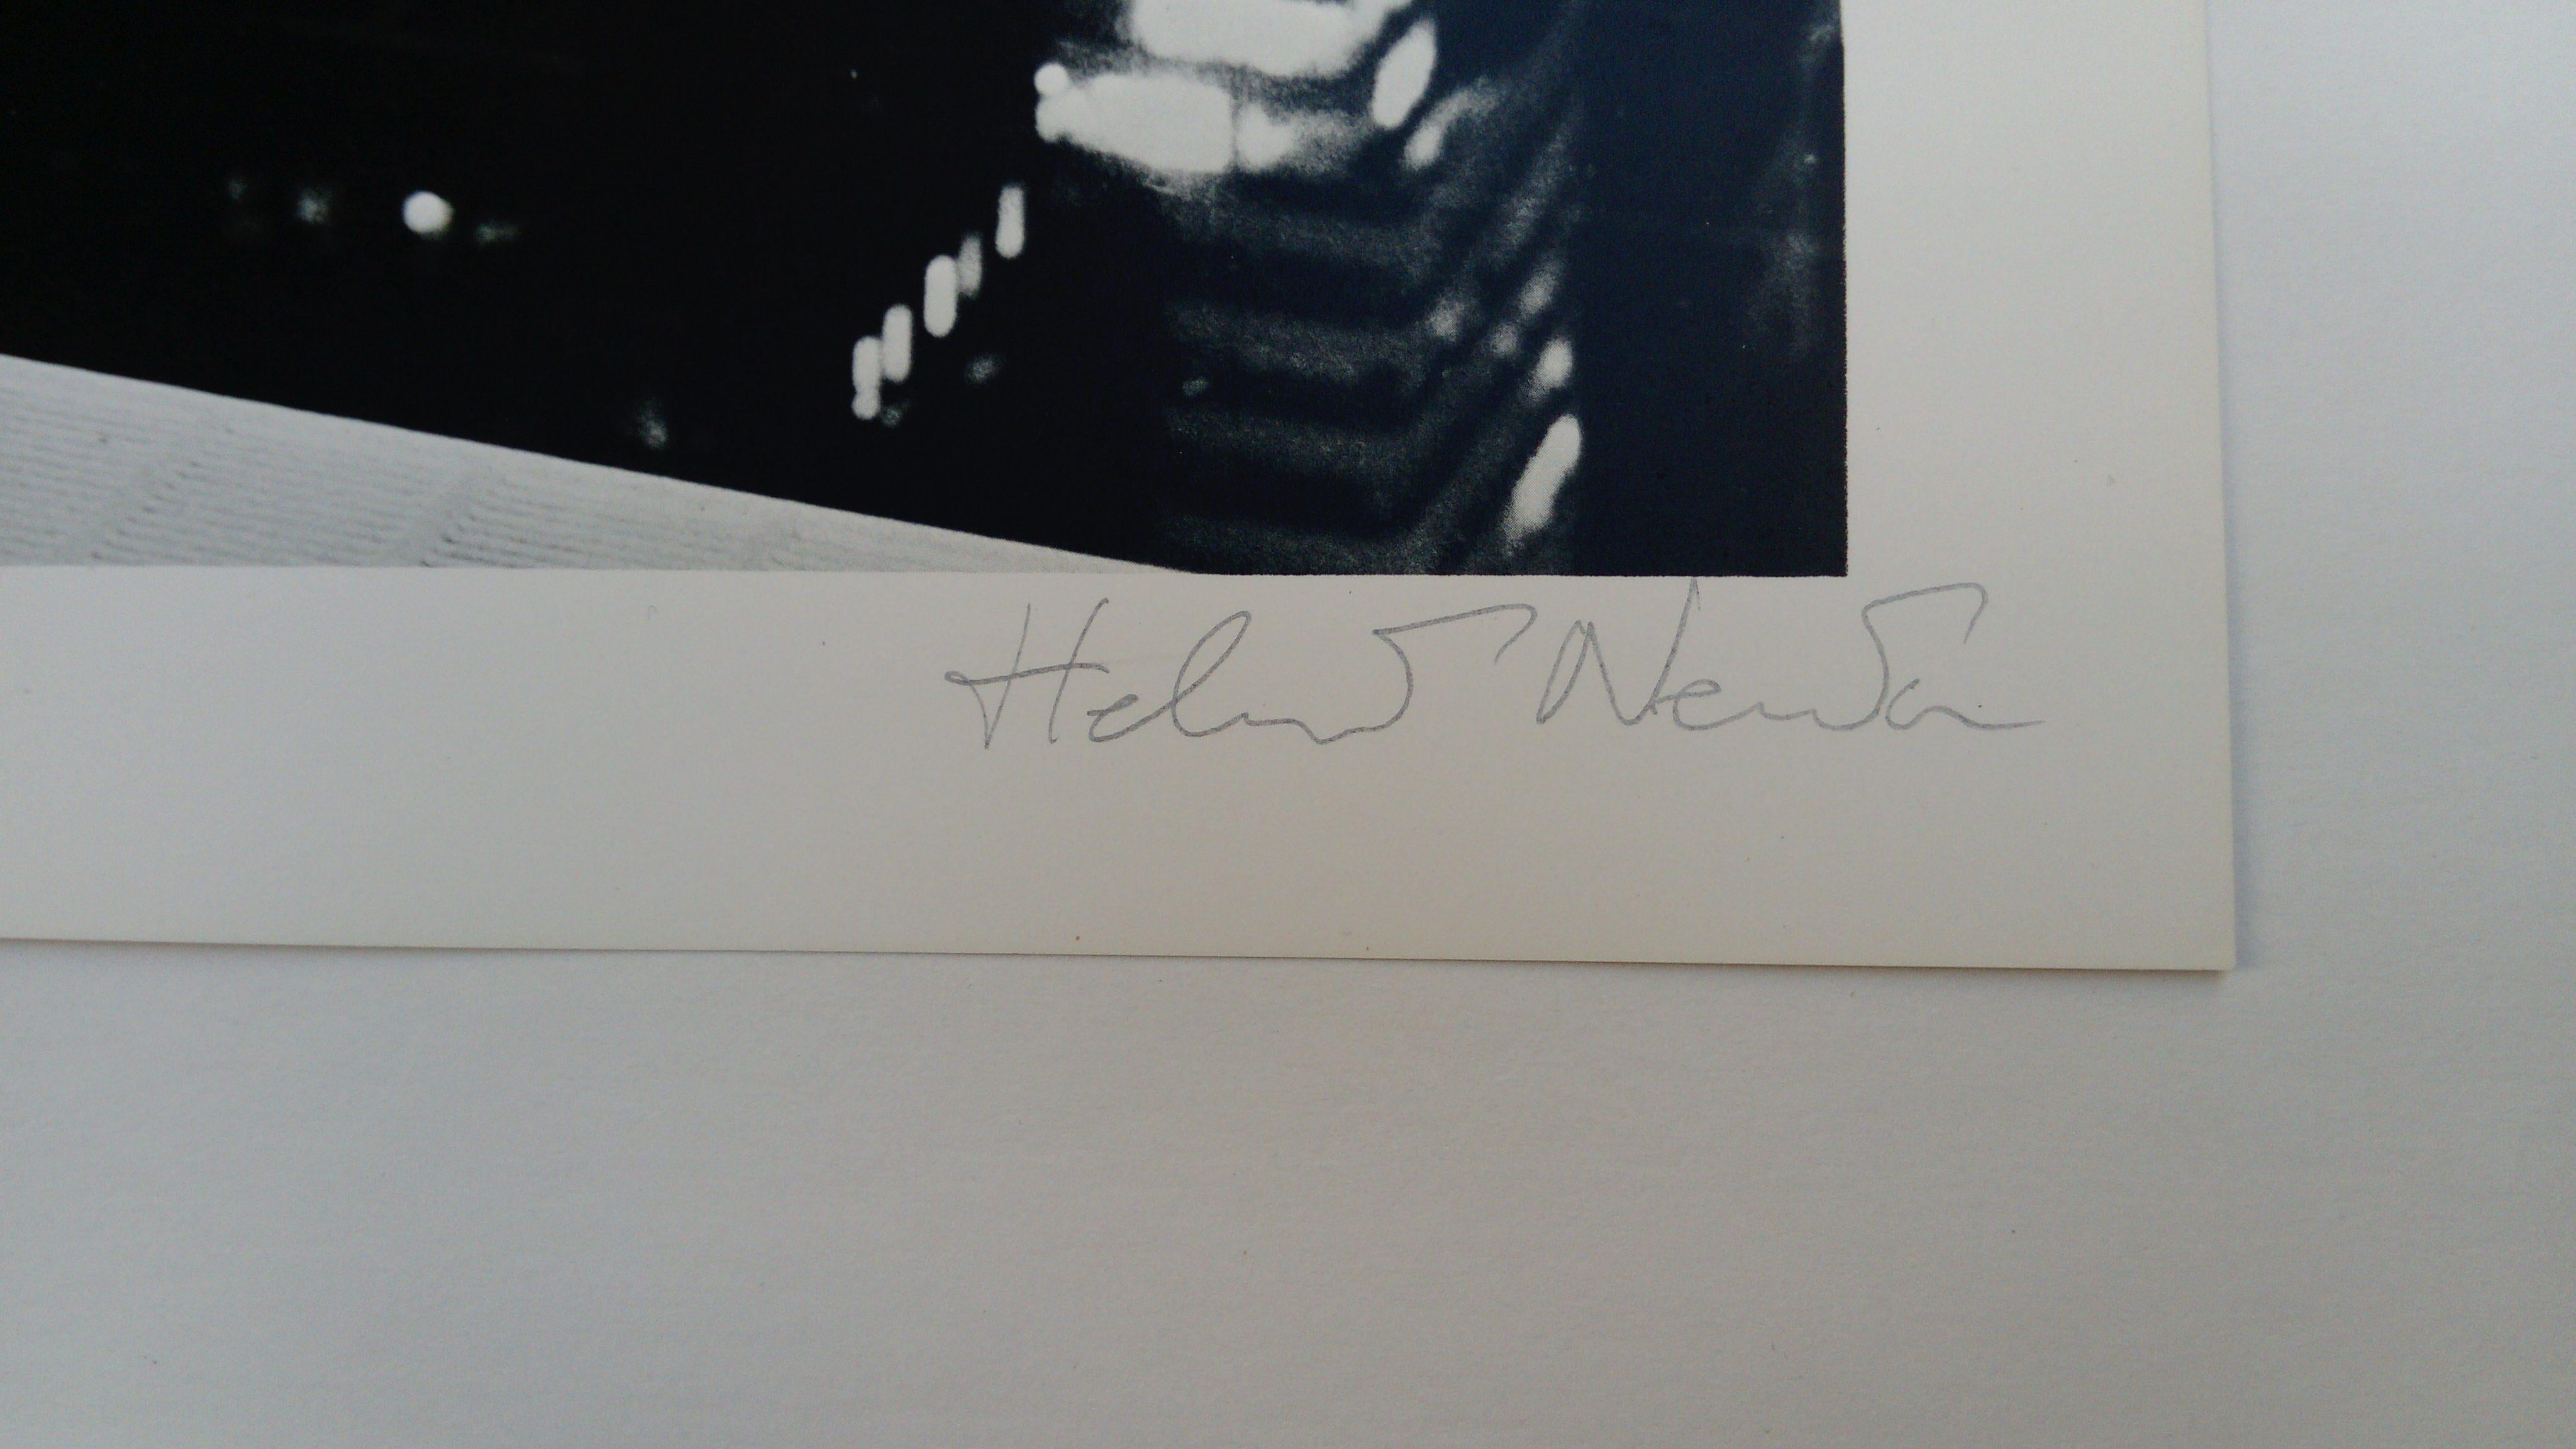 Patti Hansen over Manhattan - Black Black and White Photograph by Helmut Newton